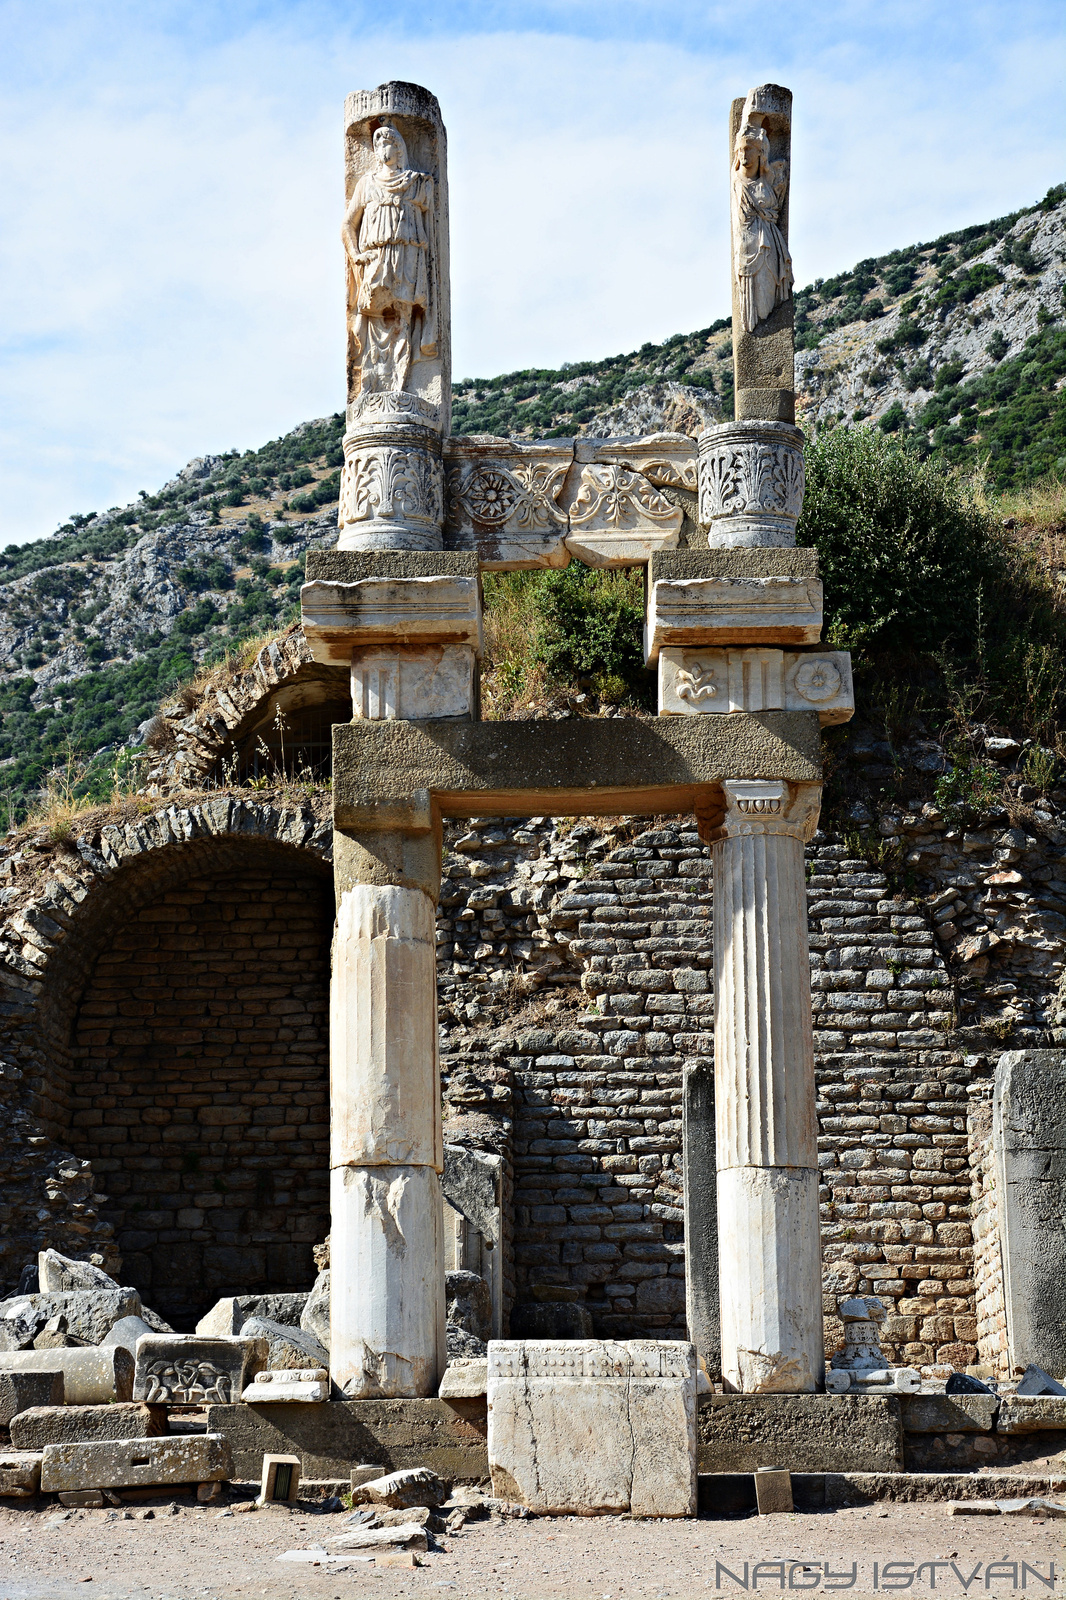 Efesus - Turkey 2015 270